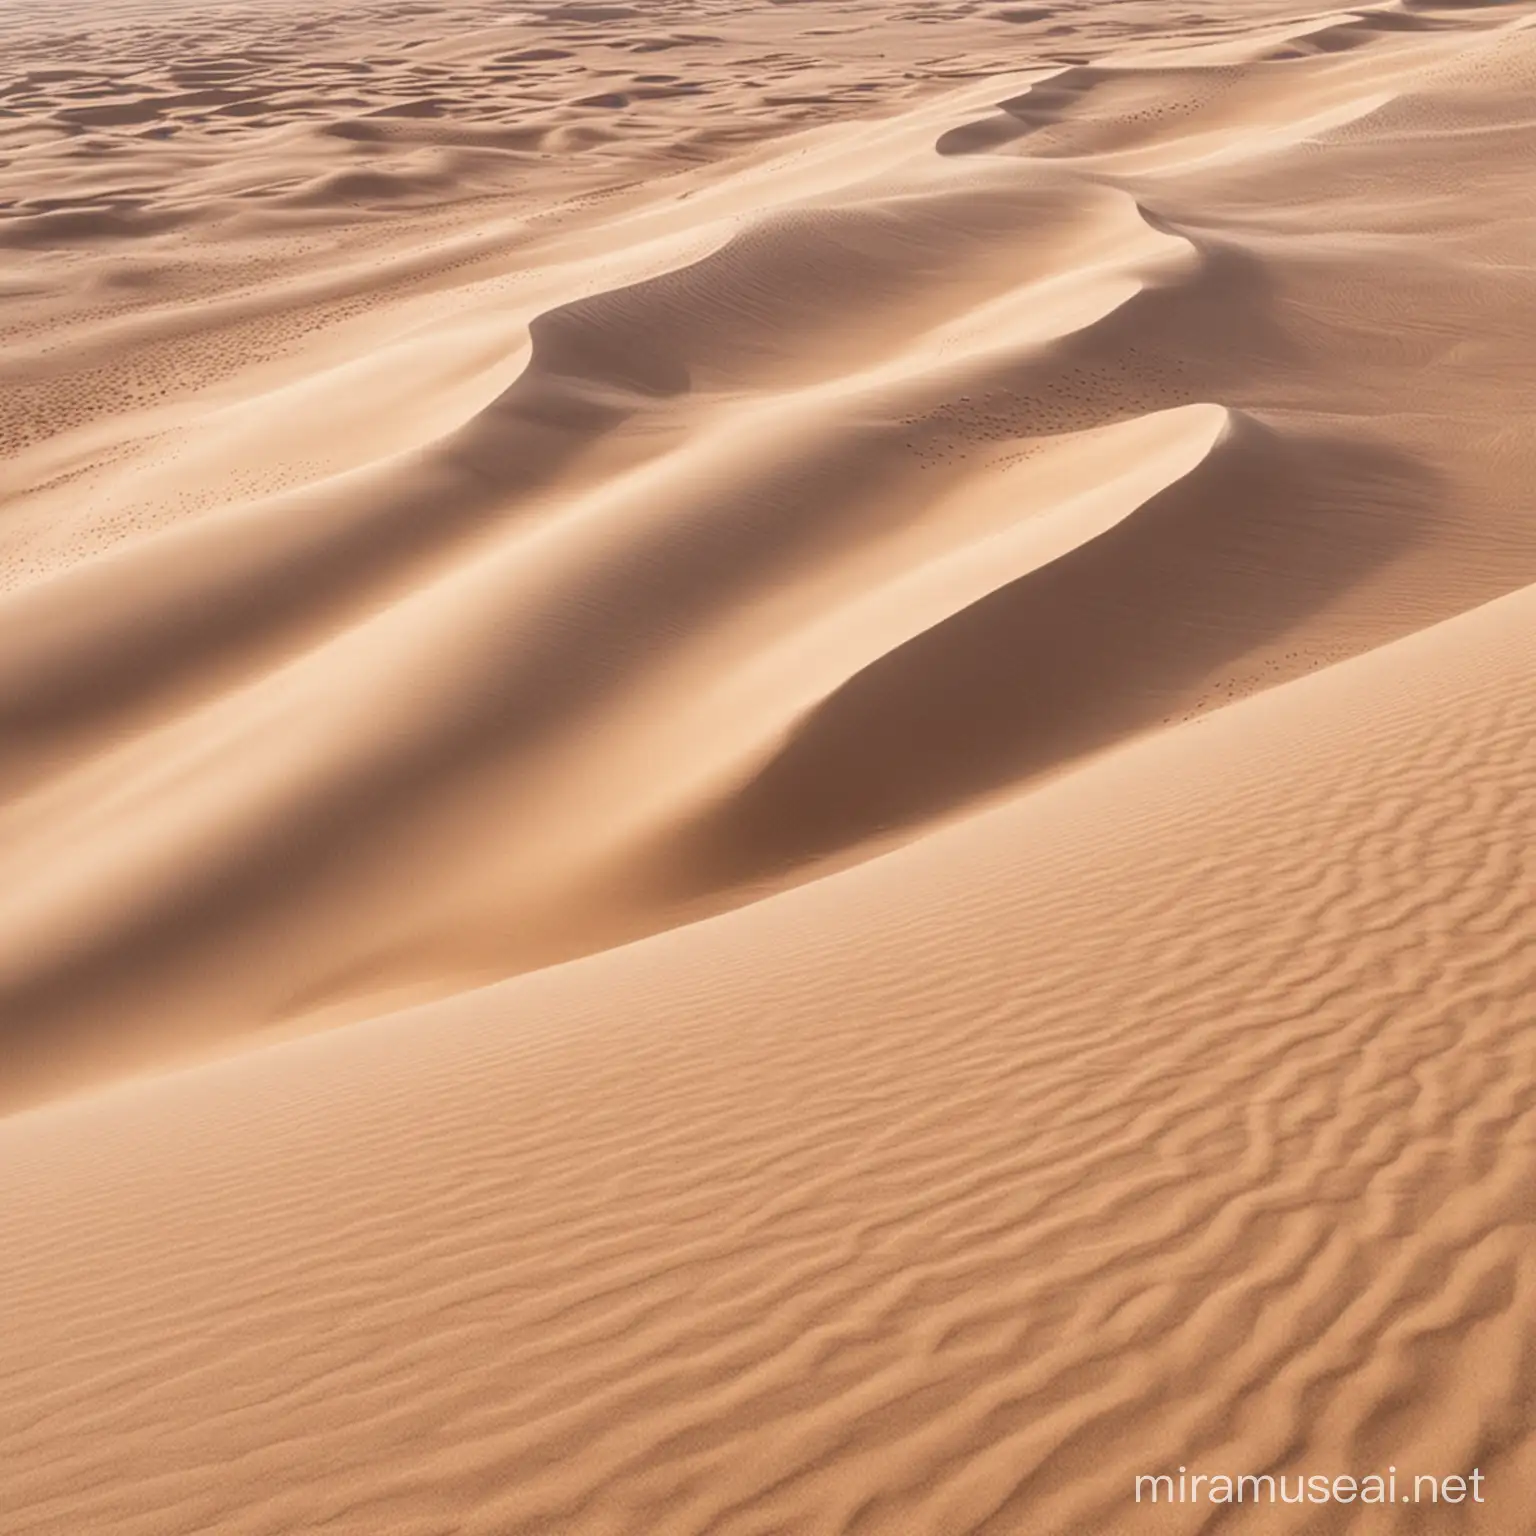 Desert and sand dunes 